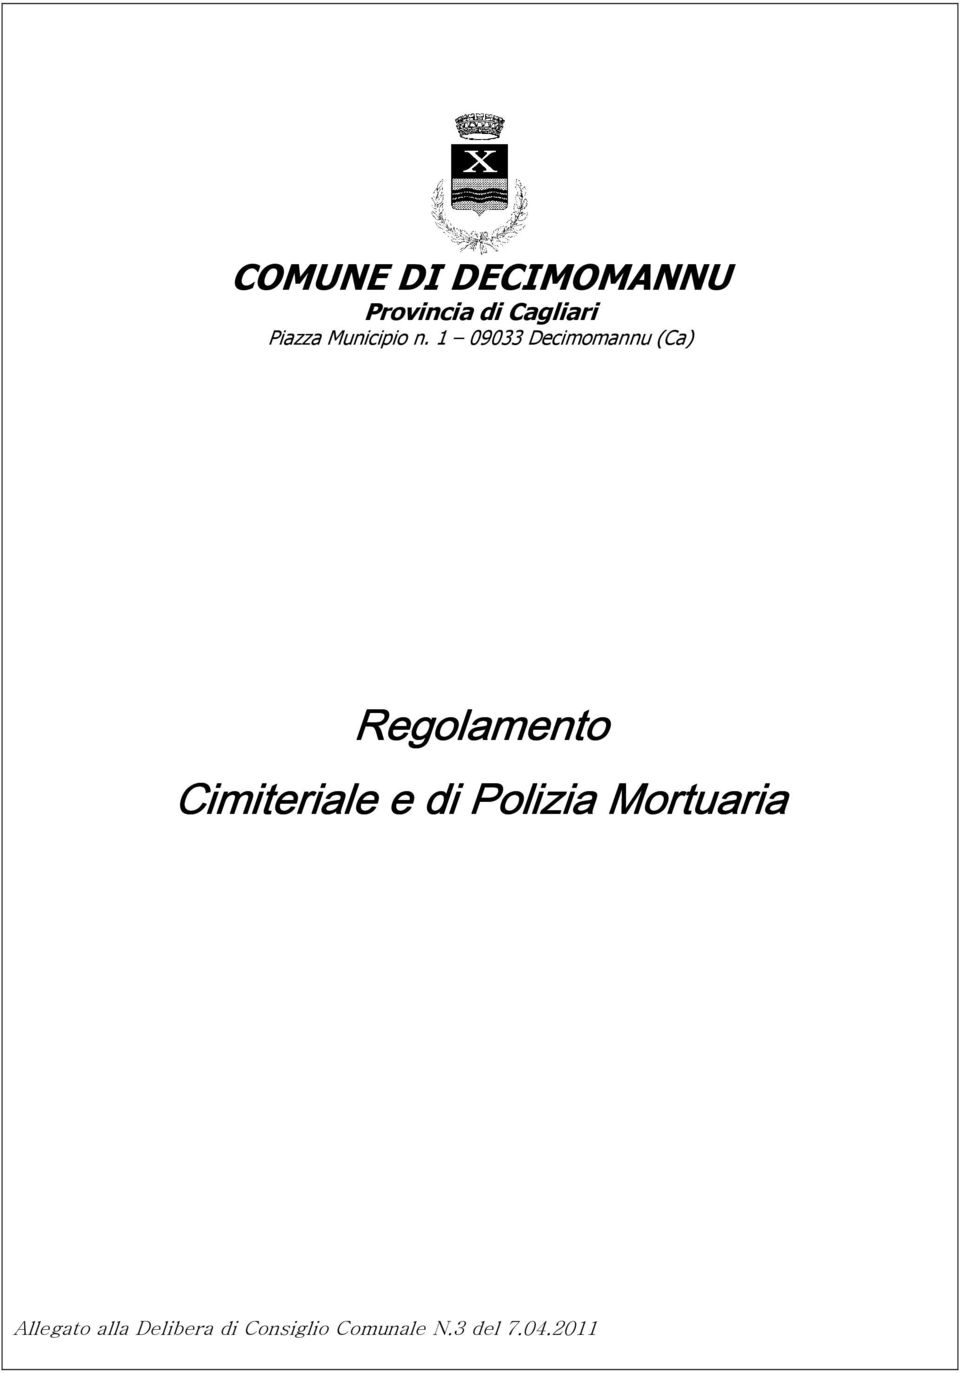 1 09033 Decimomannu (Ca) Regolamento Cimiteriale